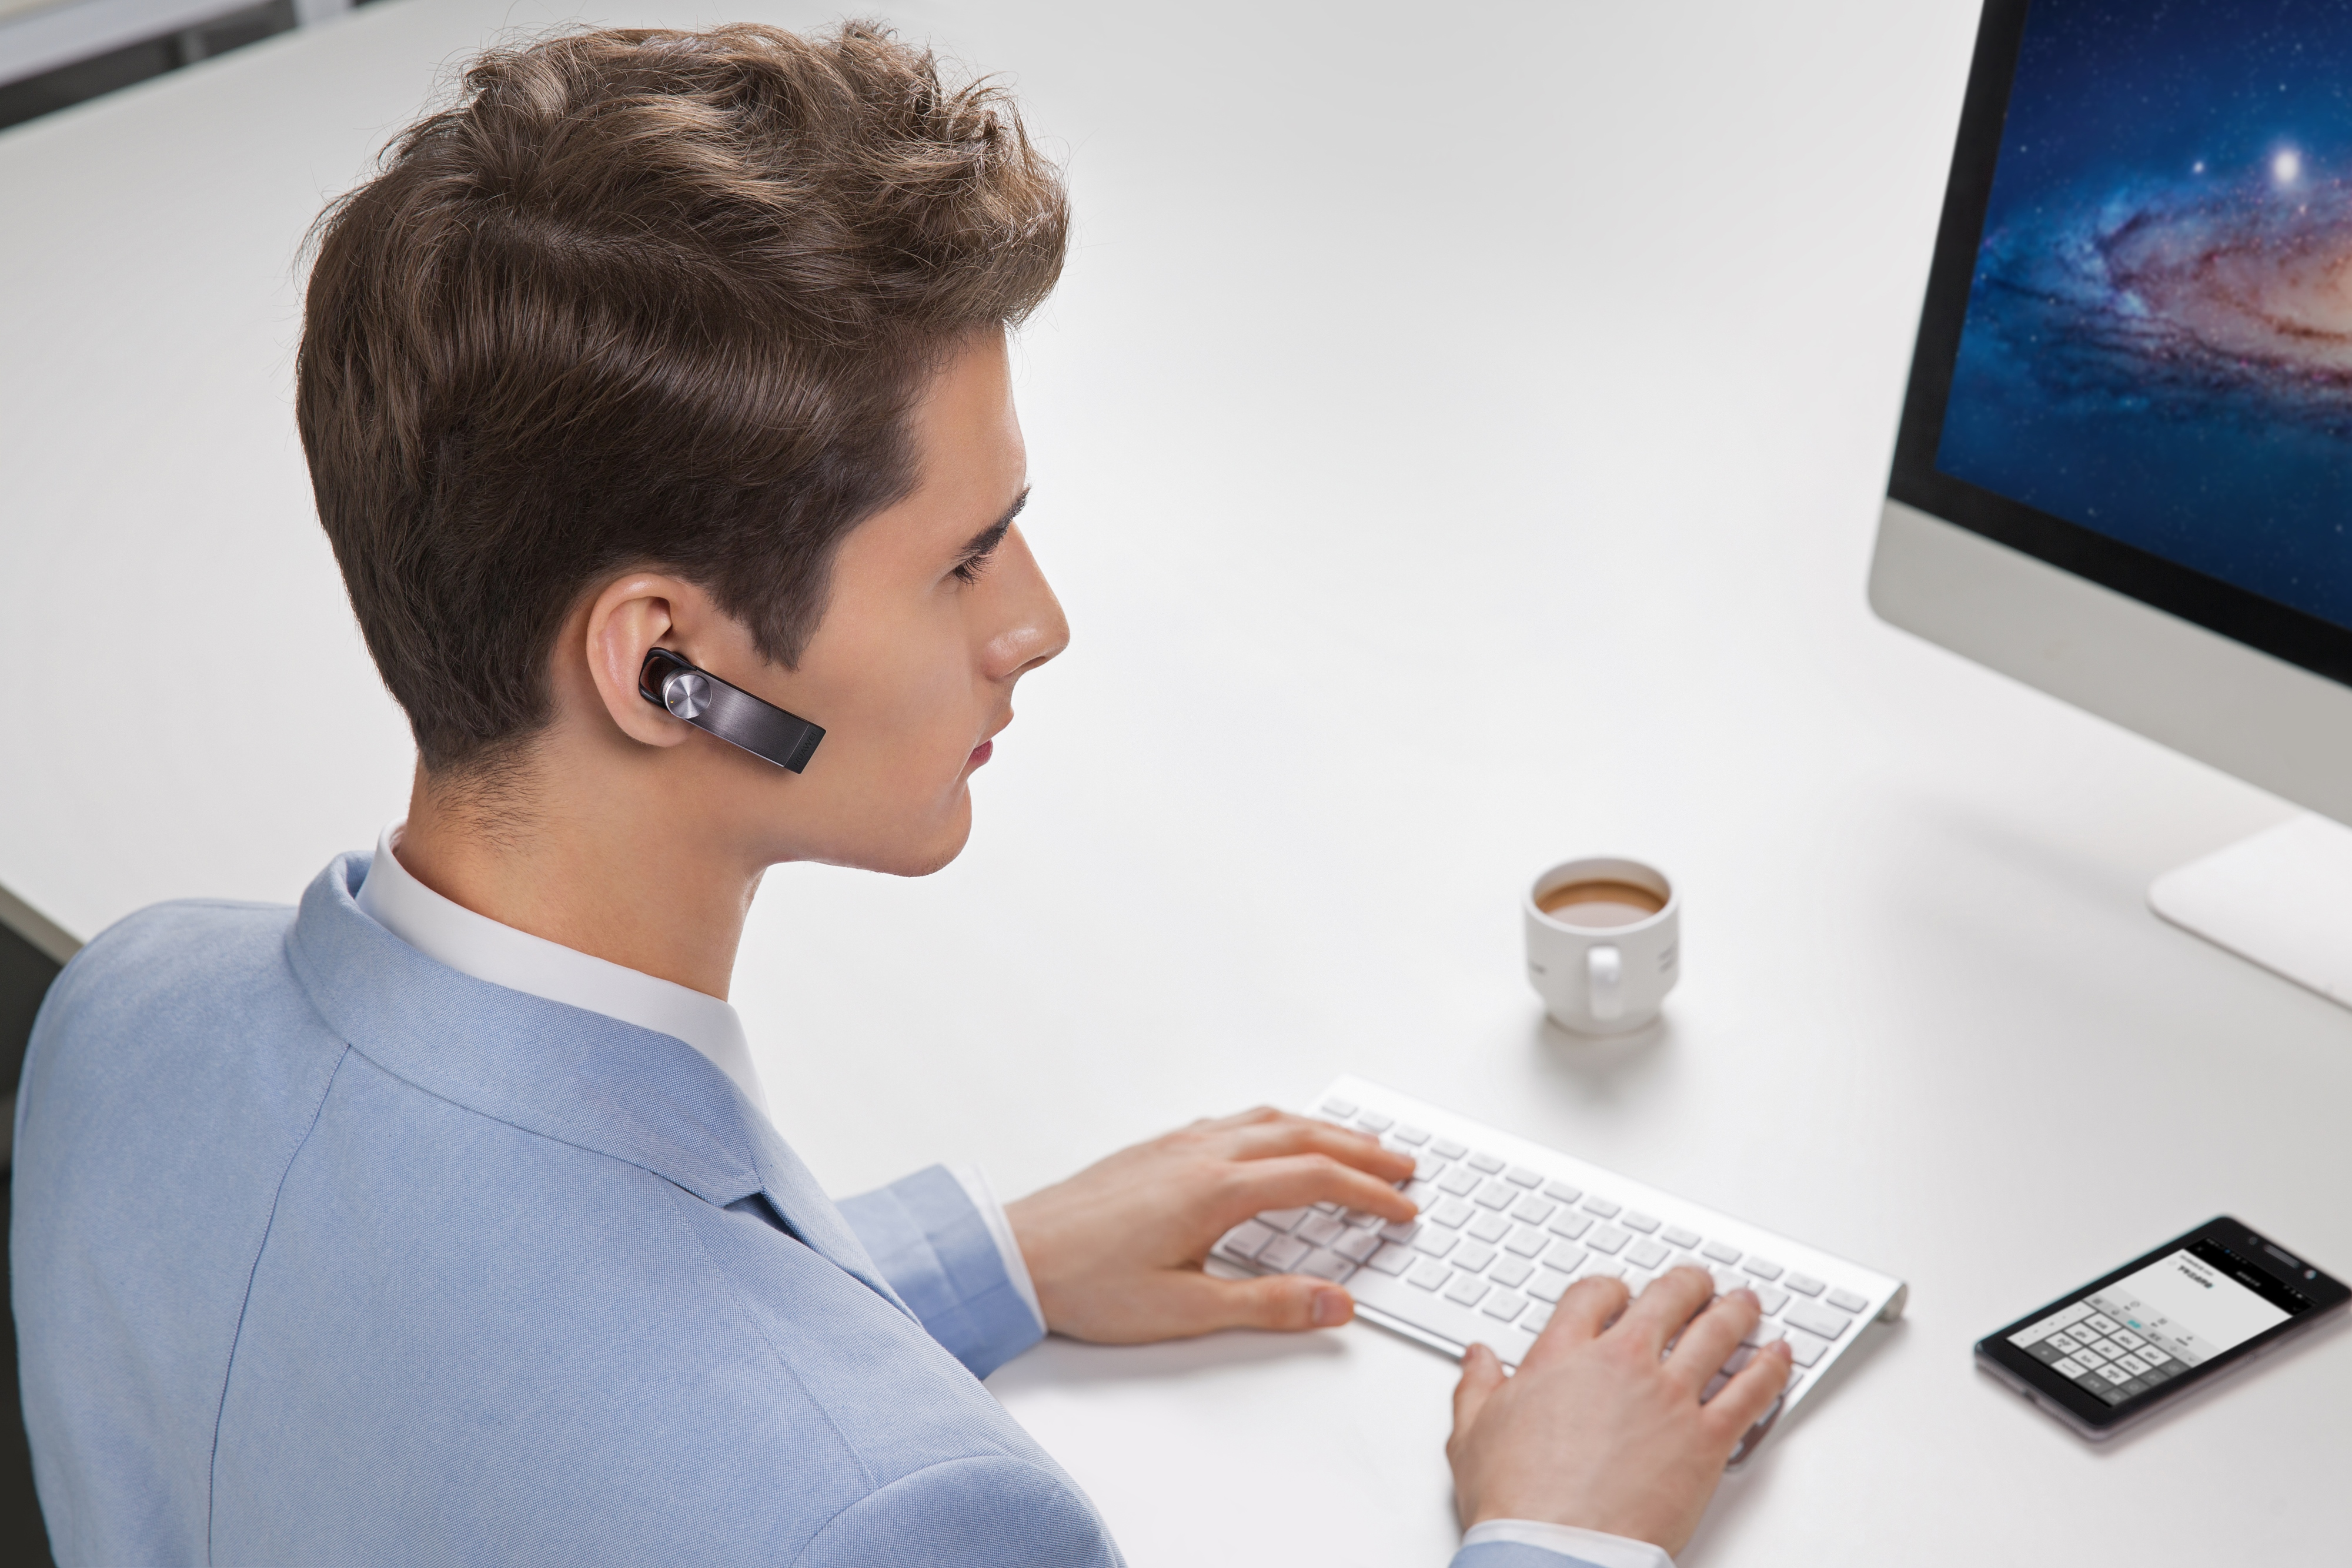 Bluetooth In-ear Grau AM07C, Headset HUAWEI